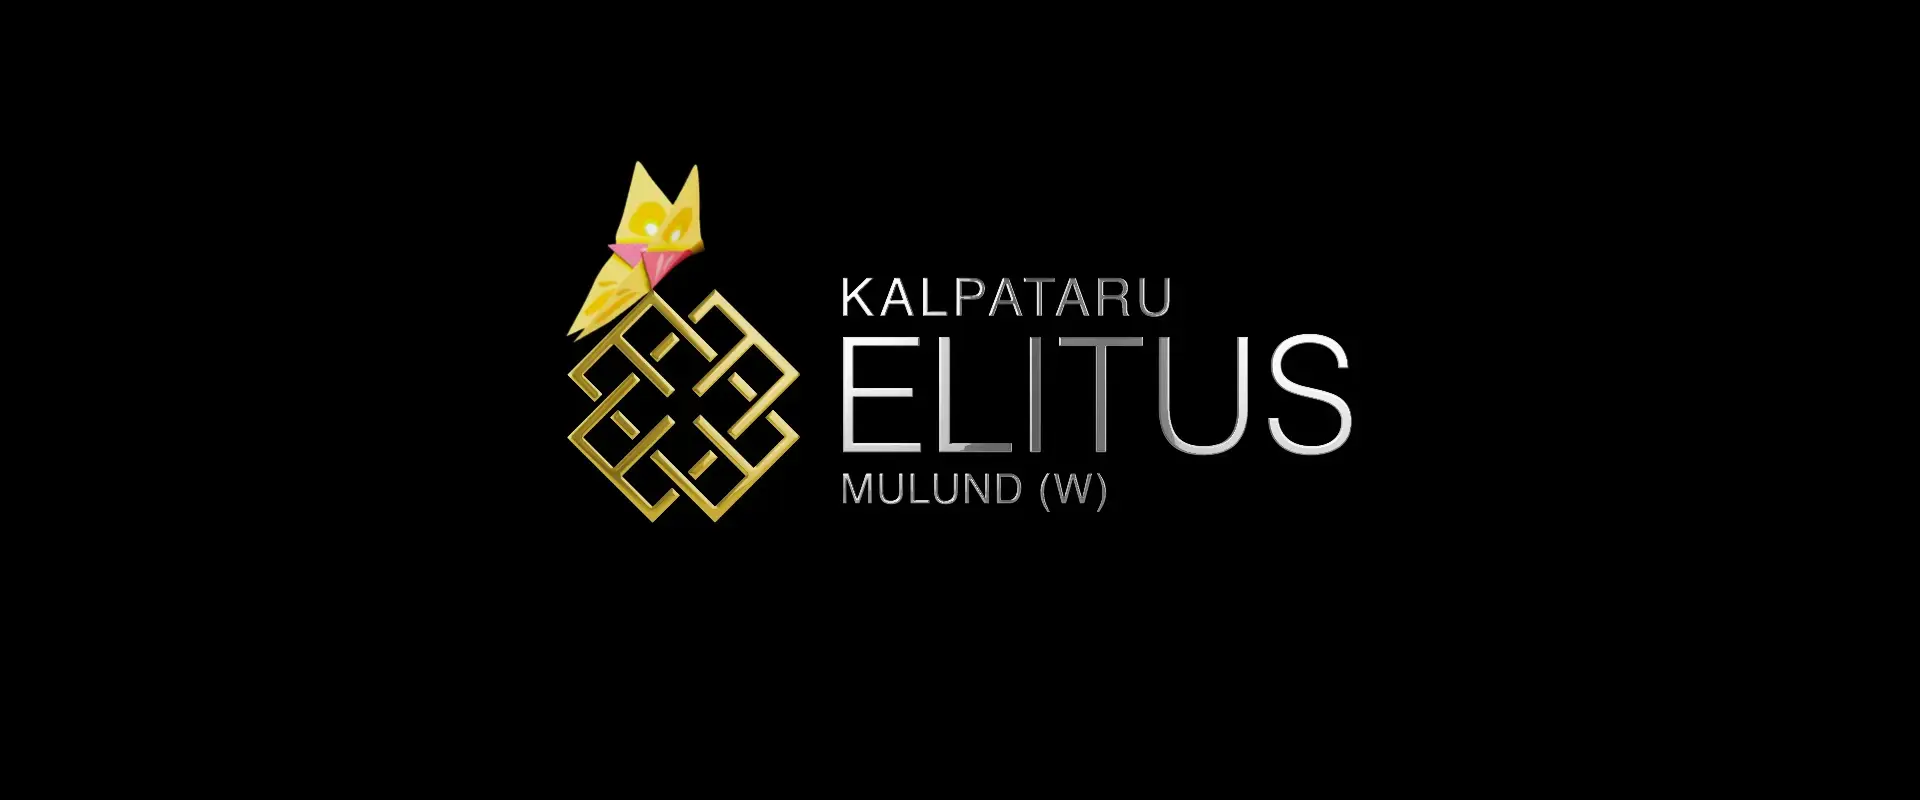 Screenshot from the promo film for Kalpataru Elitus